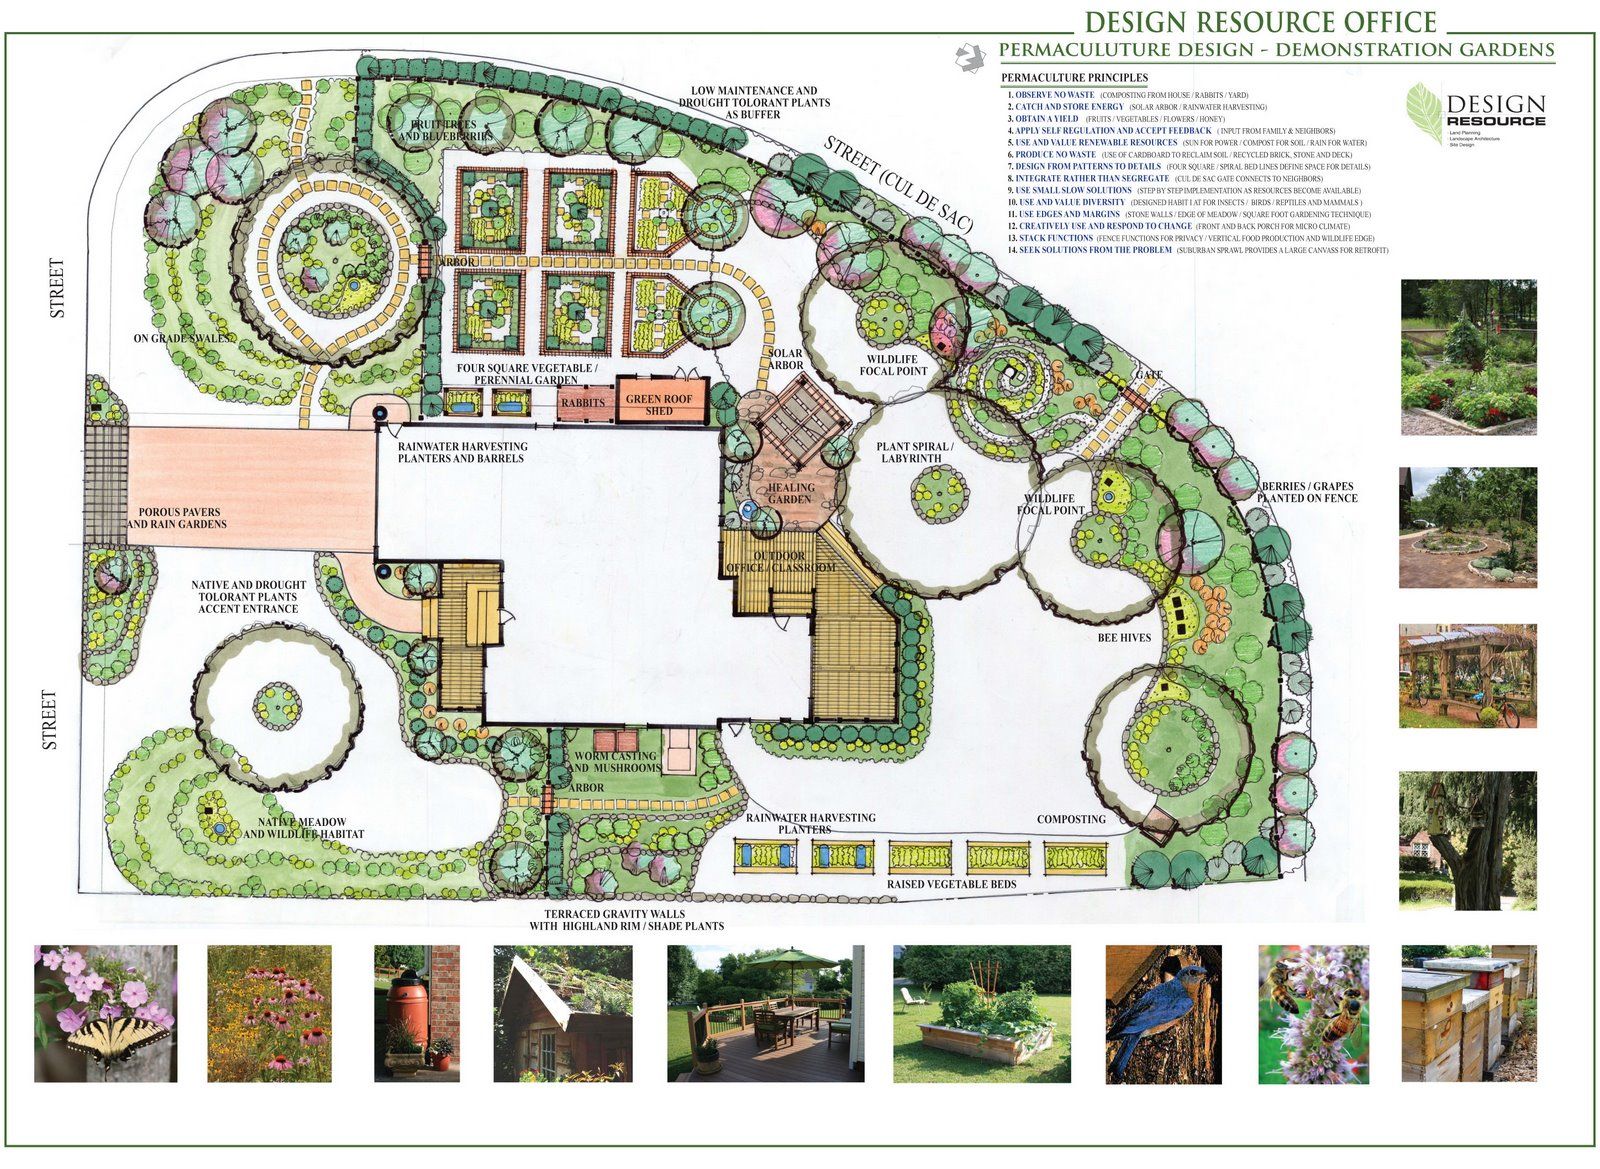 Permakultur Garten Anleitung Best Of Permaculture Design – Final Design for Design Resource